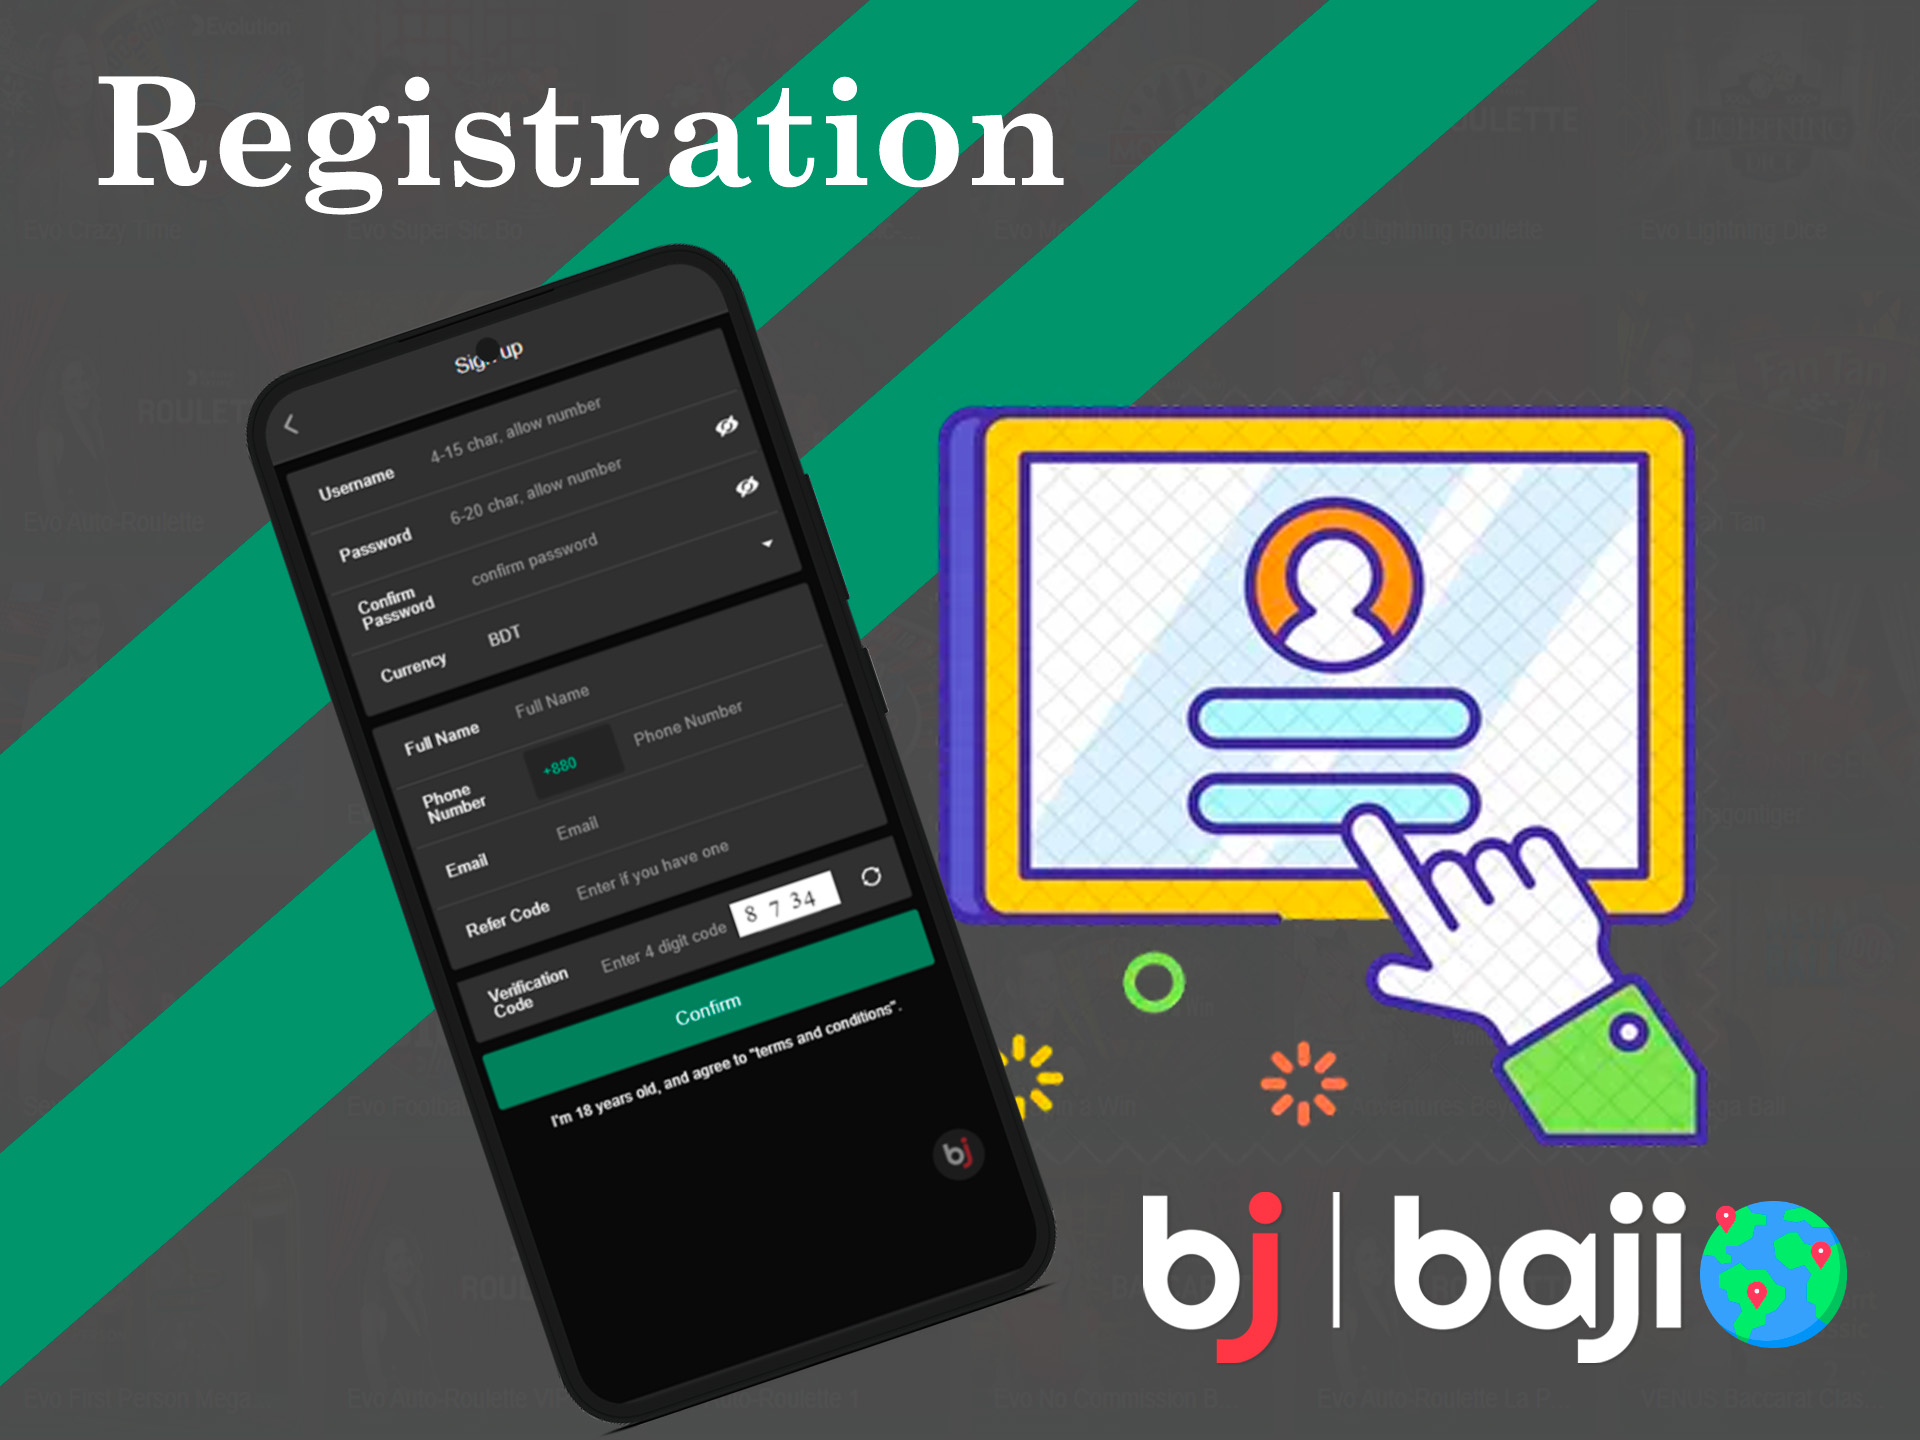 baji apk registration process in mobile devices